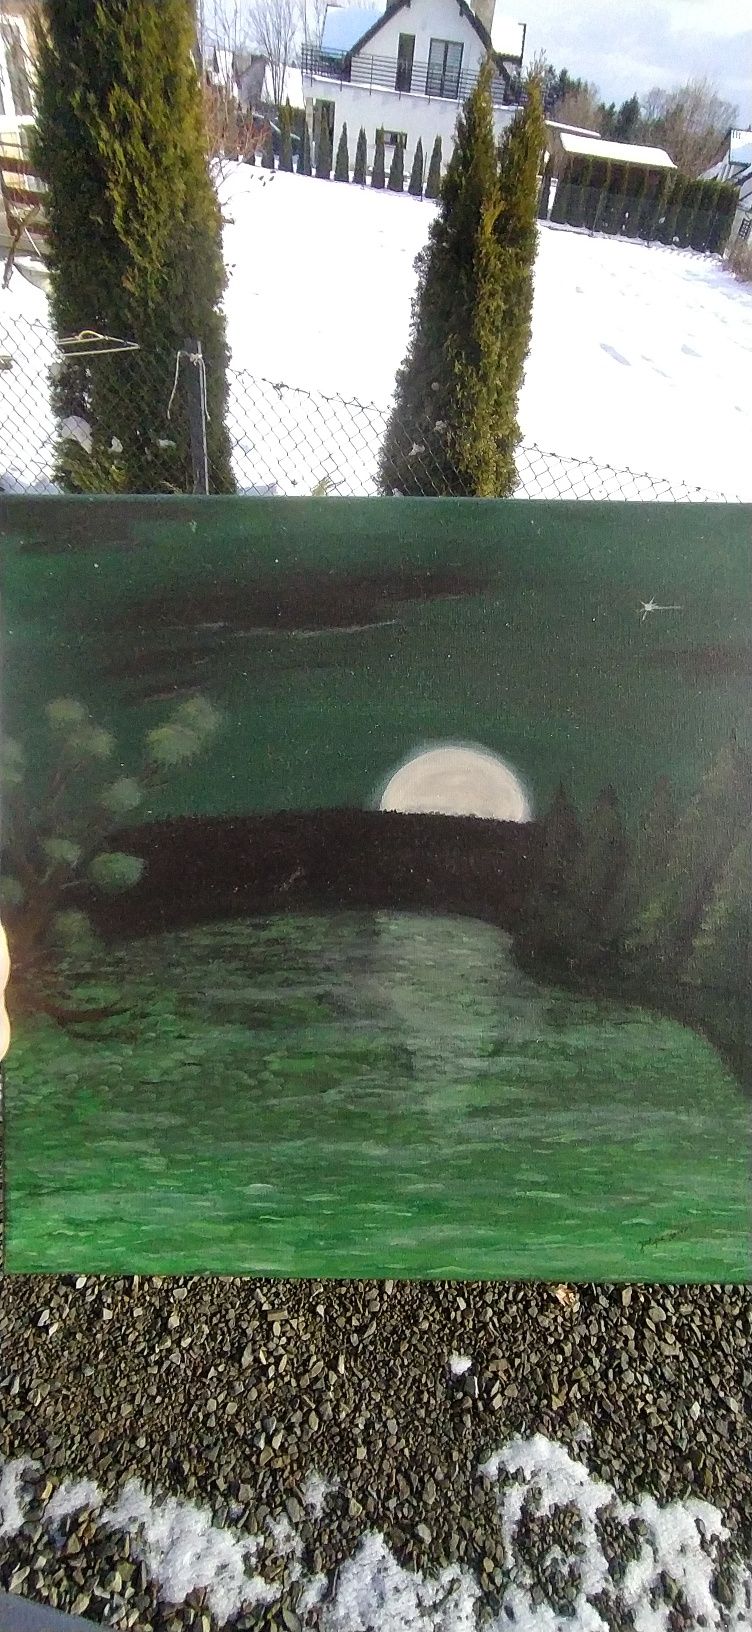 Obraz pod tytułem: "The Green Lake of the Forest" rozm. 40x40